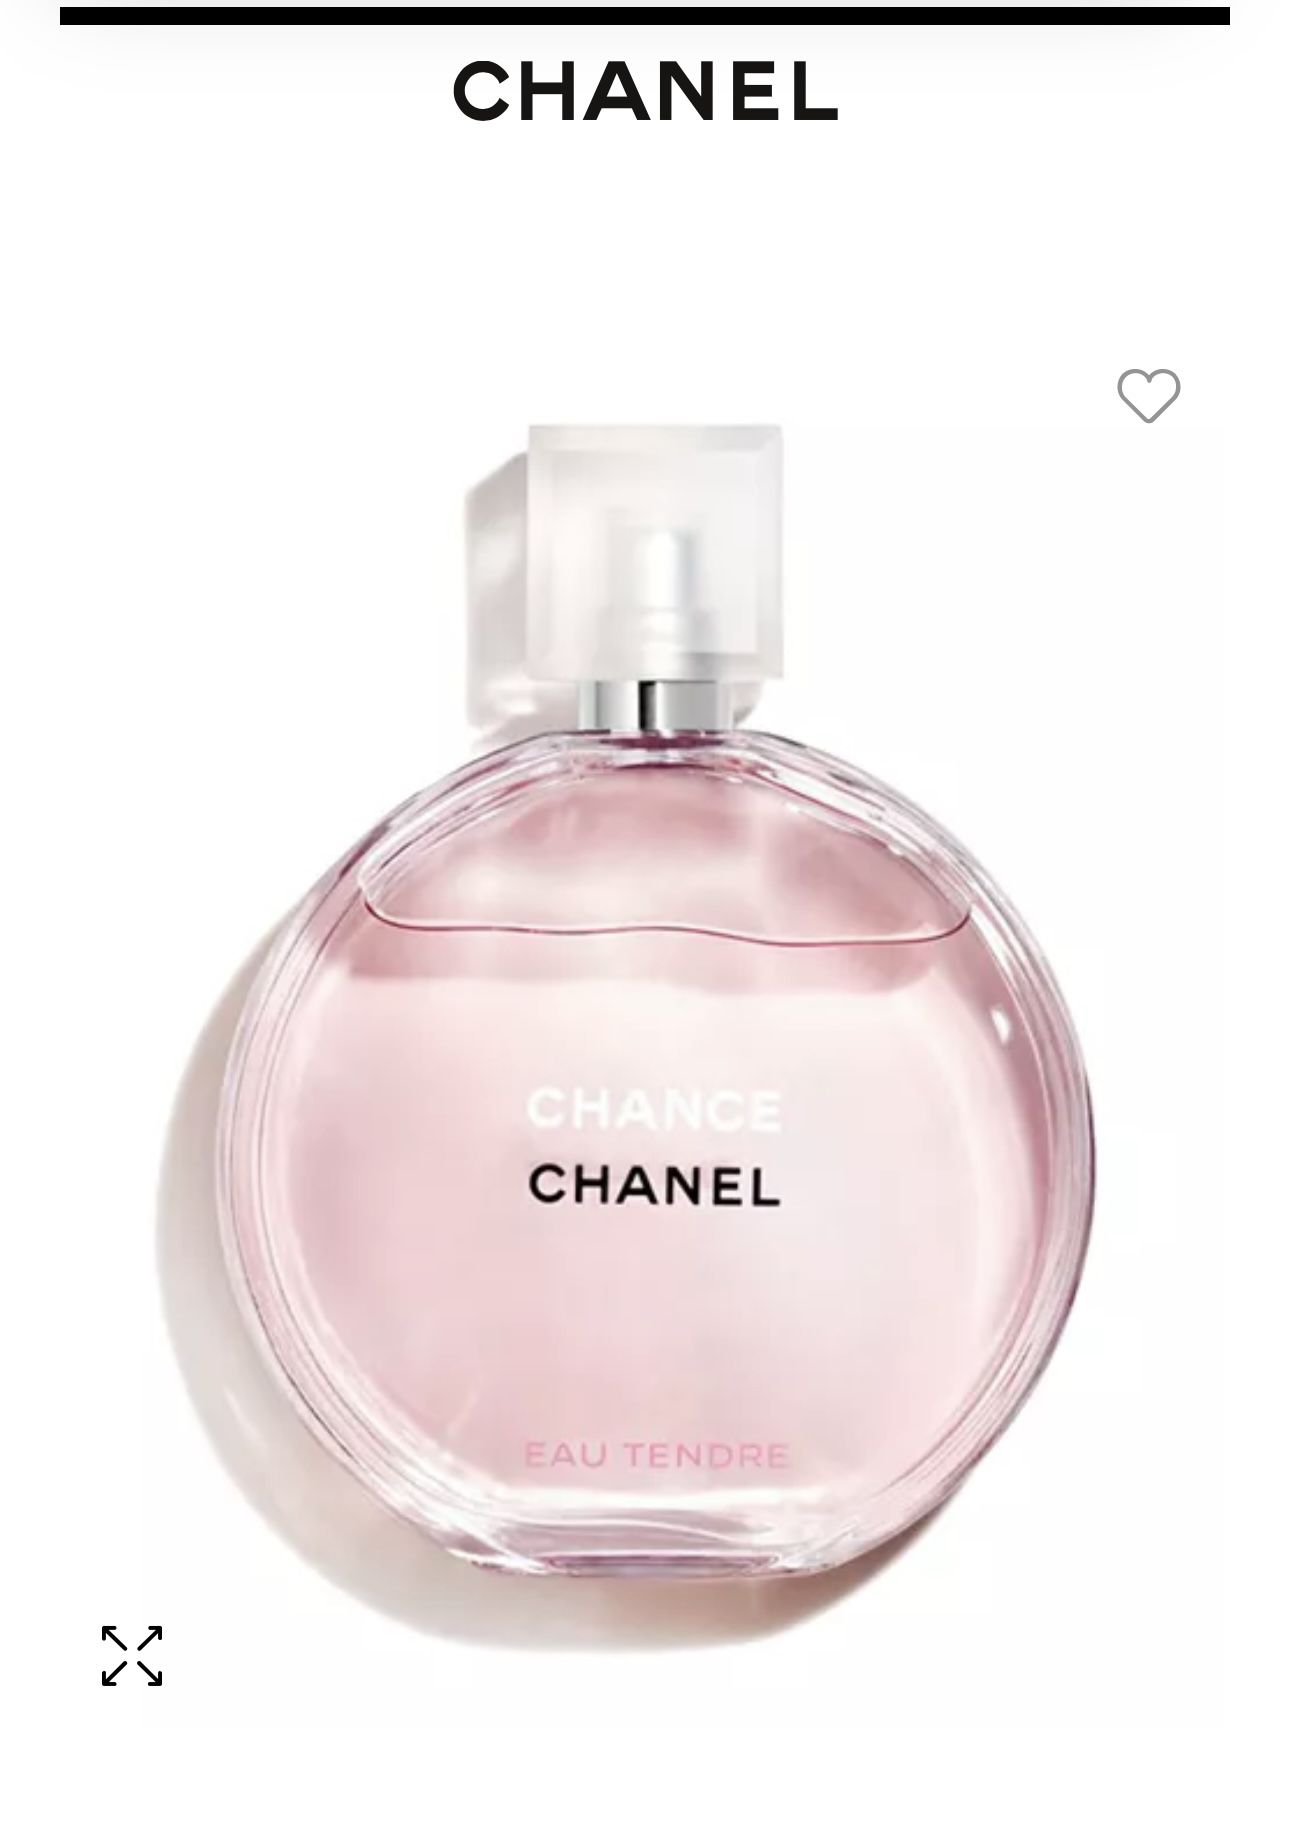 Chanel Chance Perfume Women